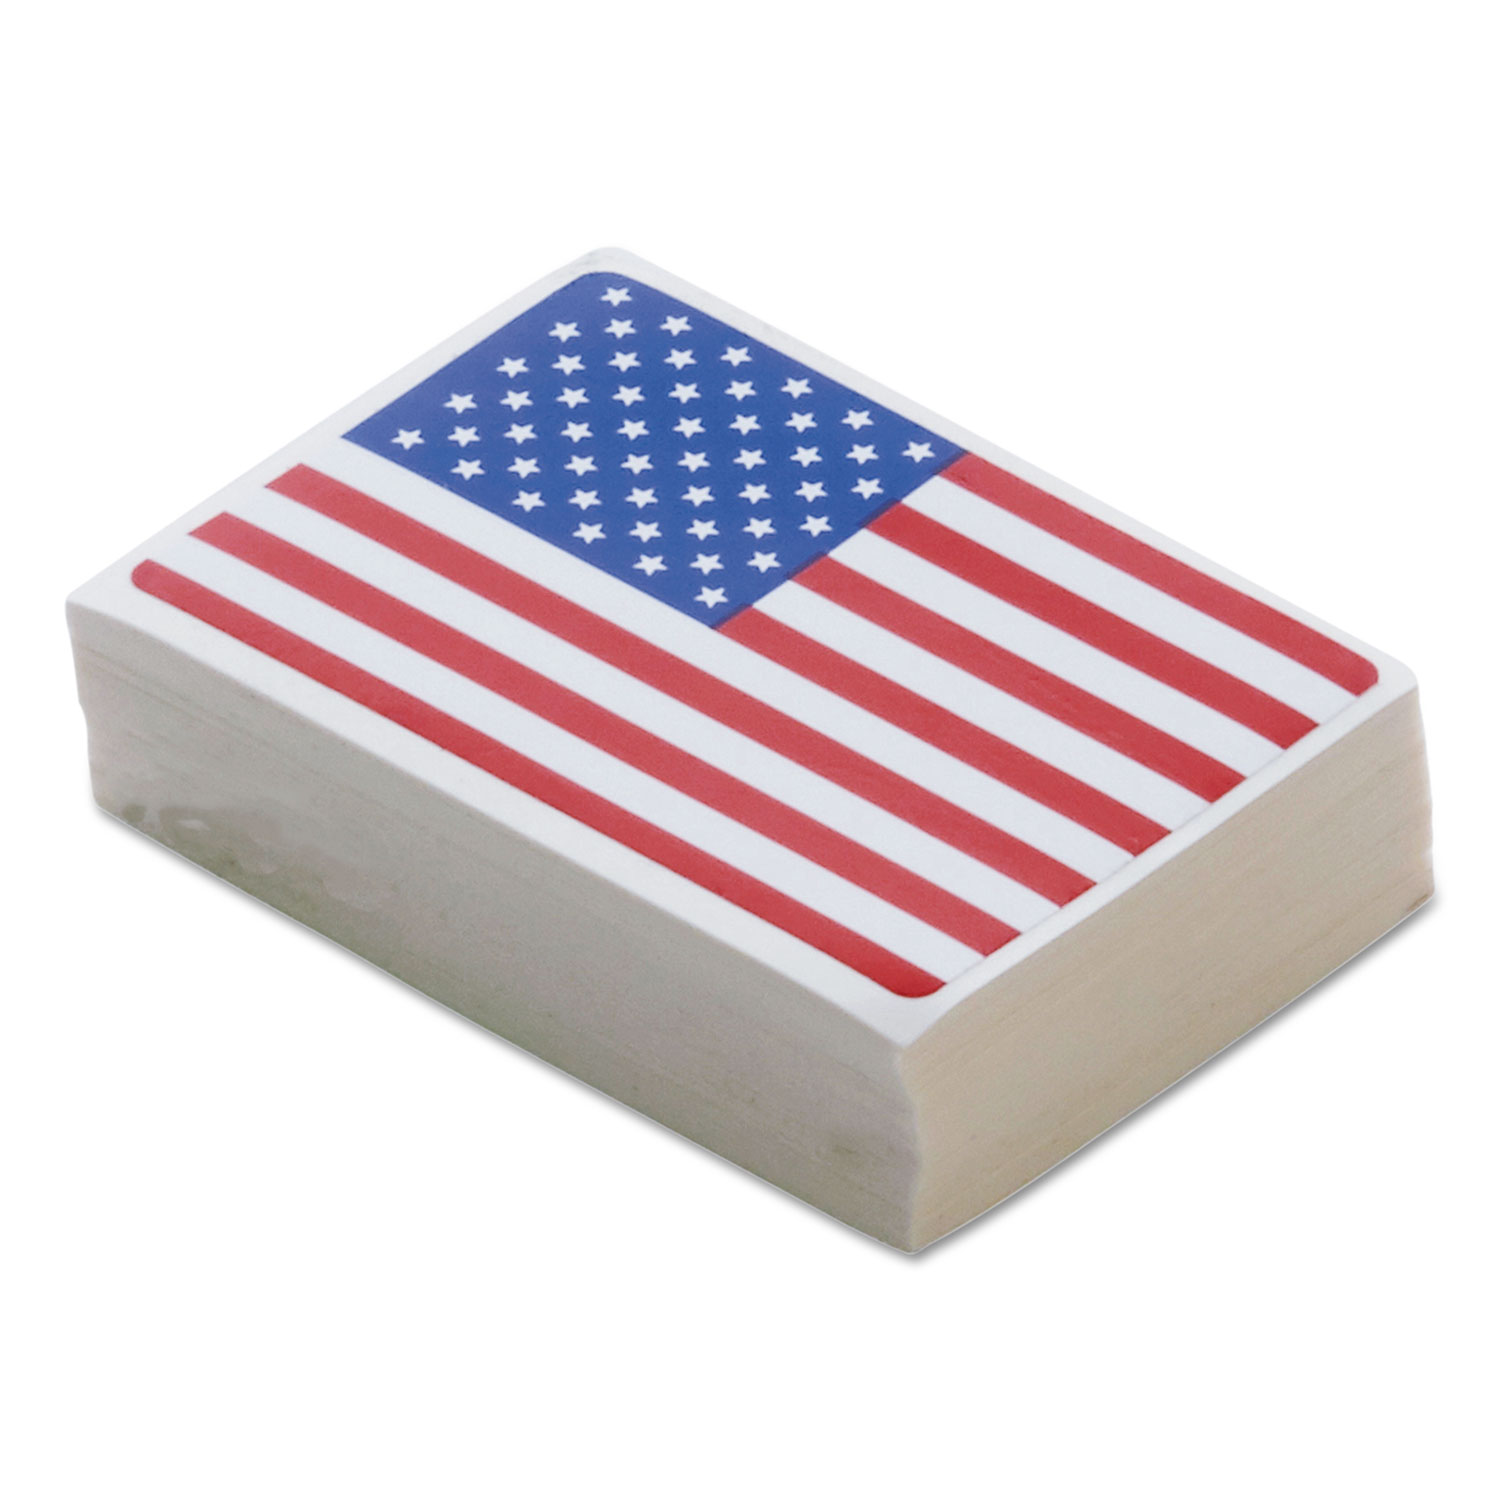 Warehouse Self-Adhesive Label, 4 1/2 x 3, USA FLAG, 100/Pack